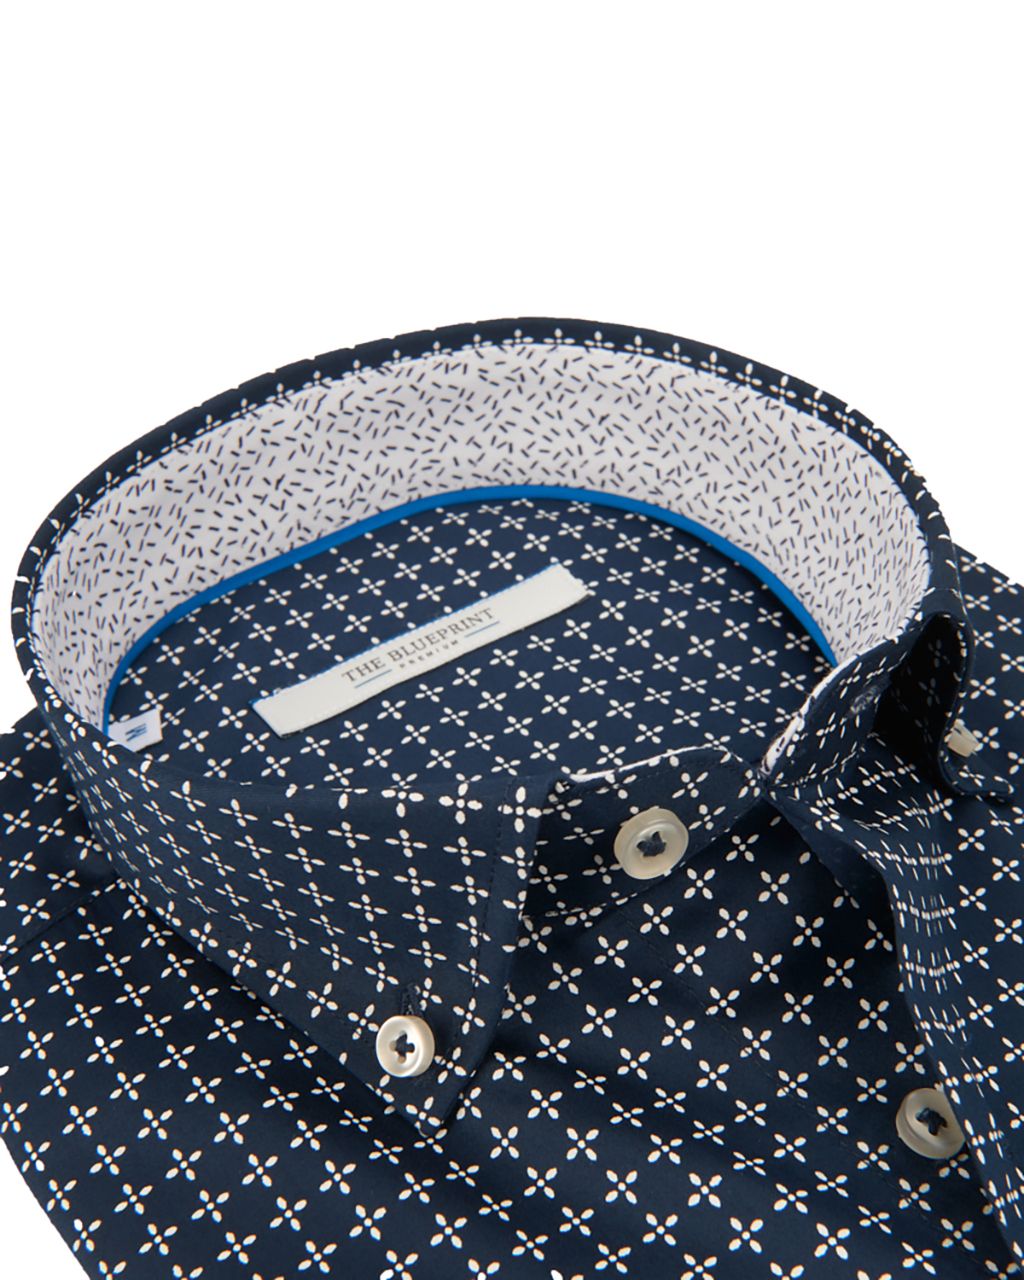 The BLUEPRINT Premium Trendy overhemd LM Donkerblauw print 064762-001-L